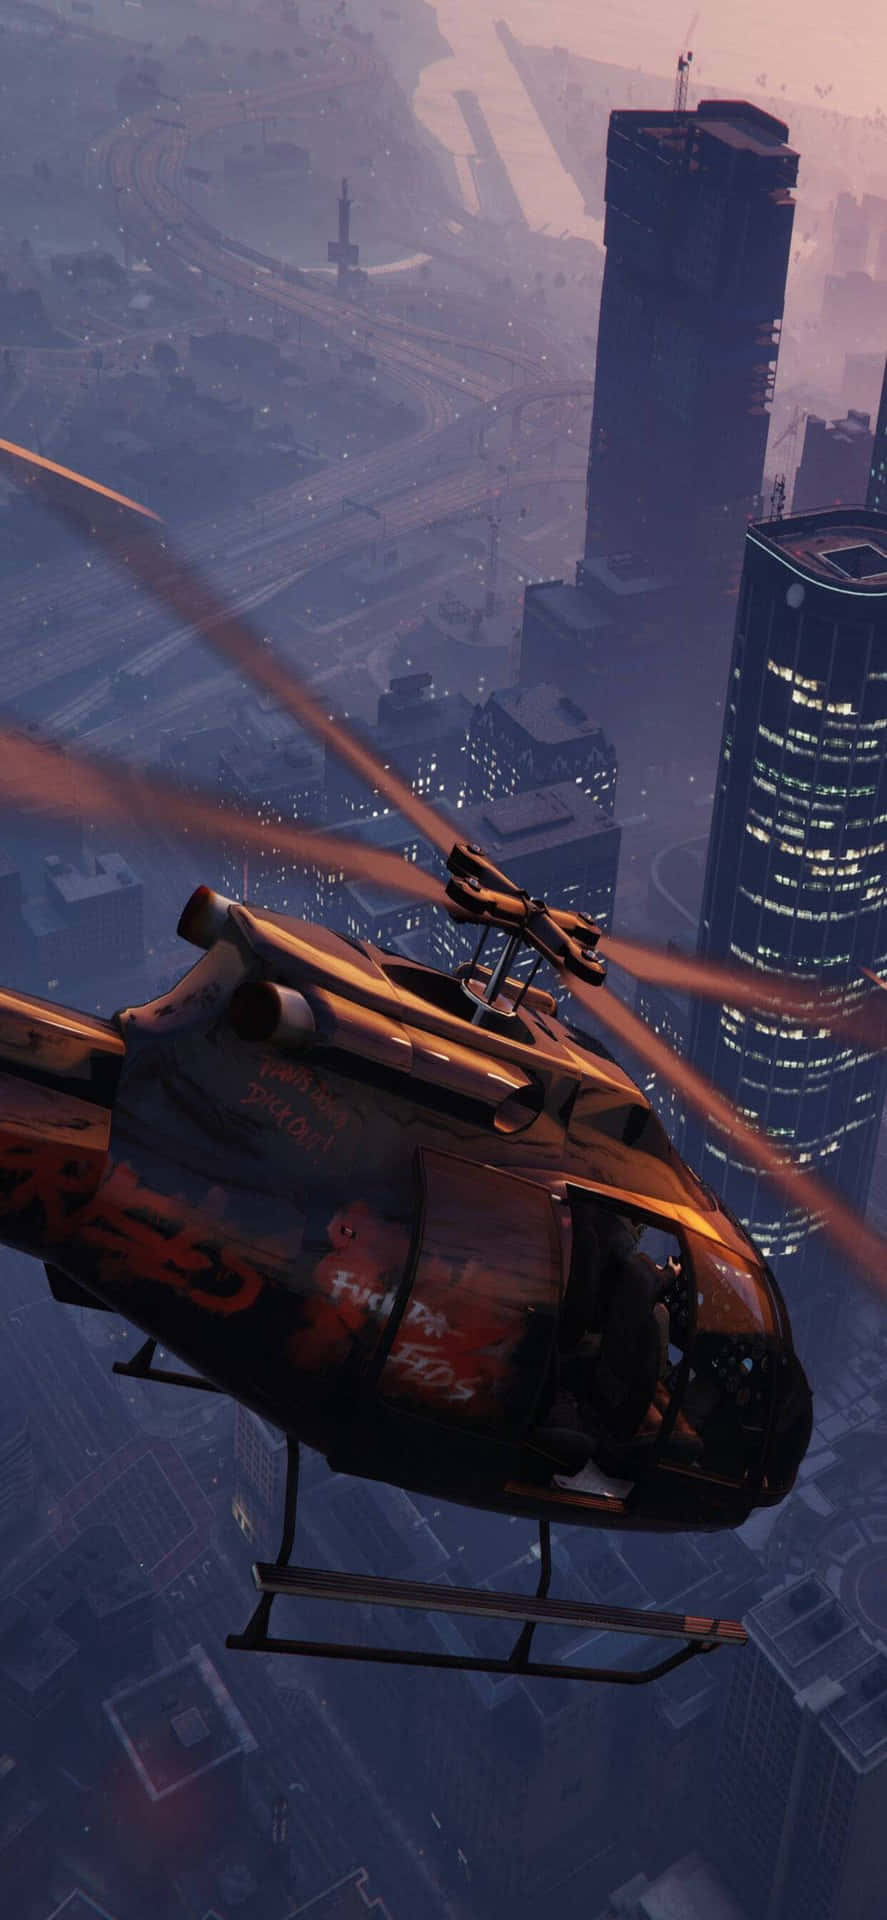 Fondode Pantalla De Grand Theft Auto V Para El Iphone Xs Max Con Un Helicóptero Volando Alrededor.